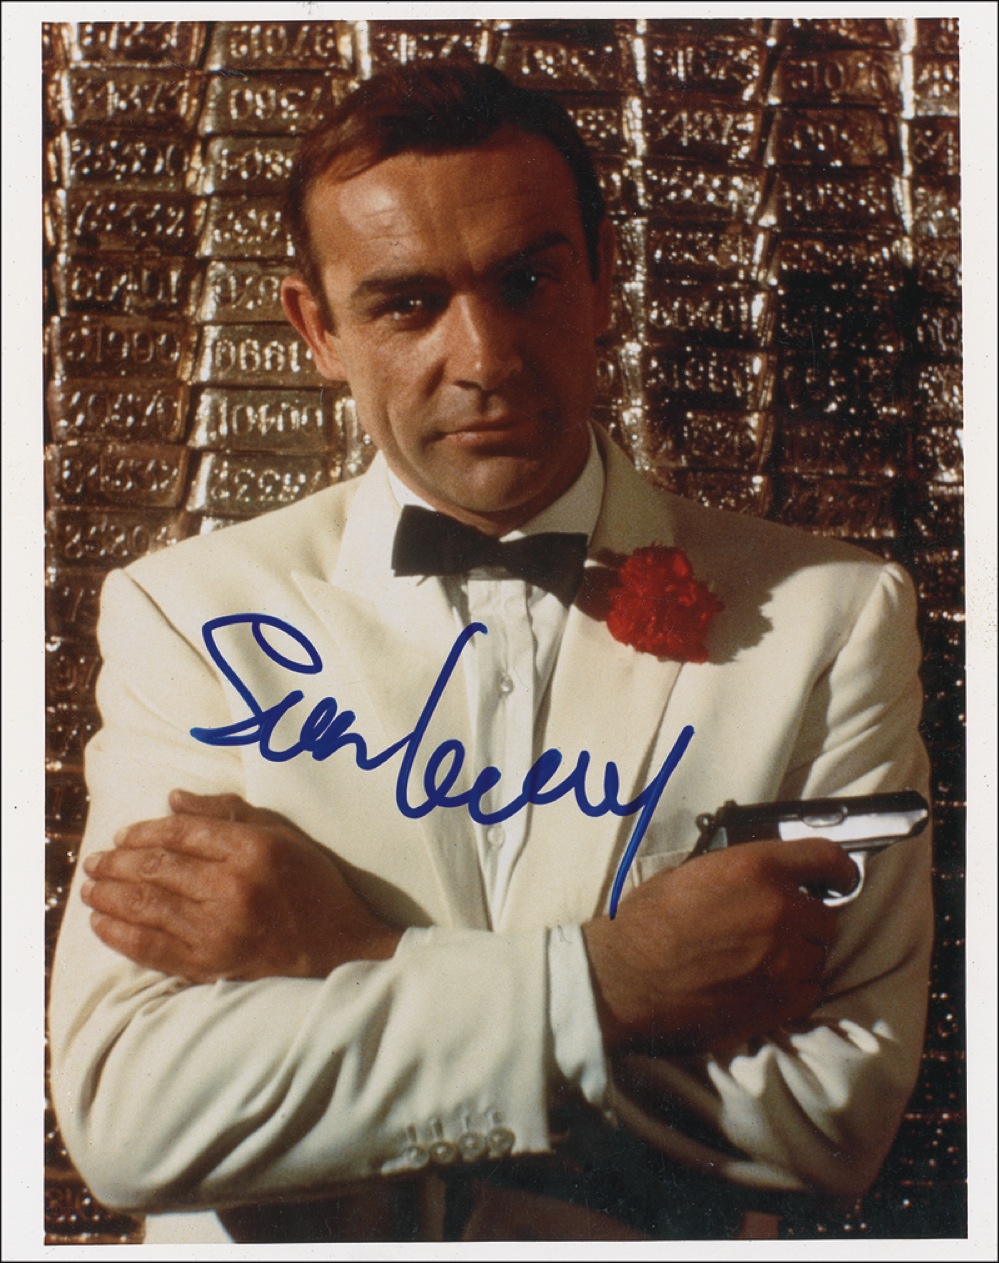 Lot #930 James Bond: Sean Connery